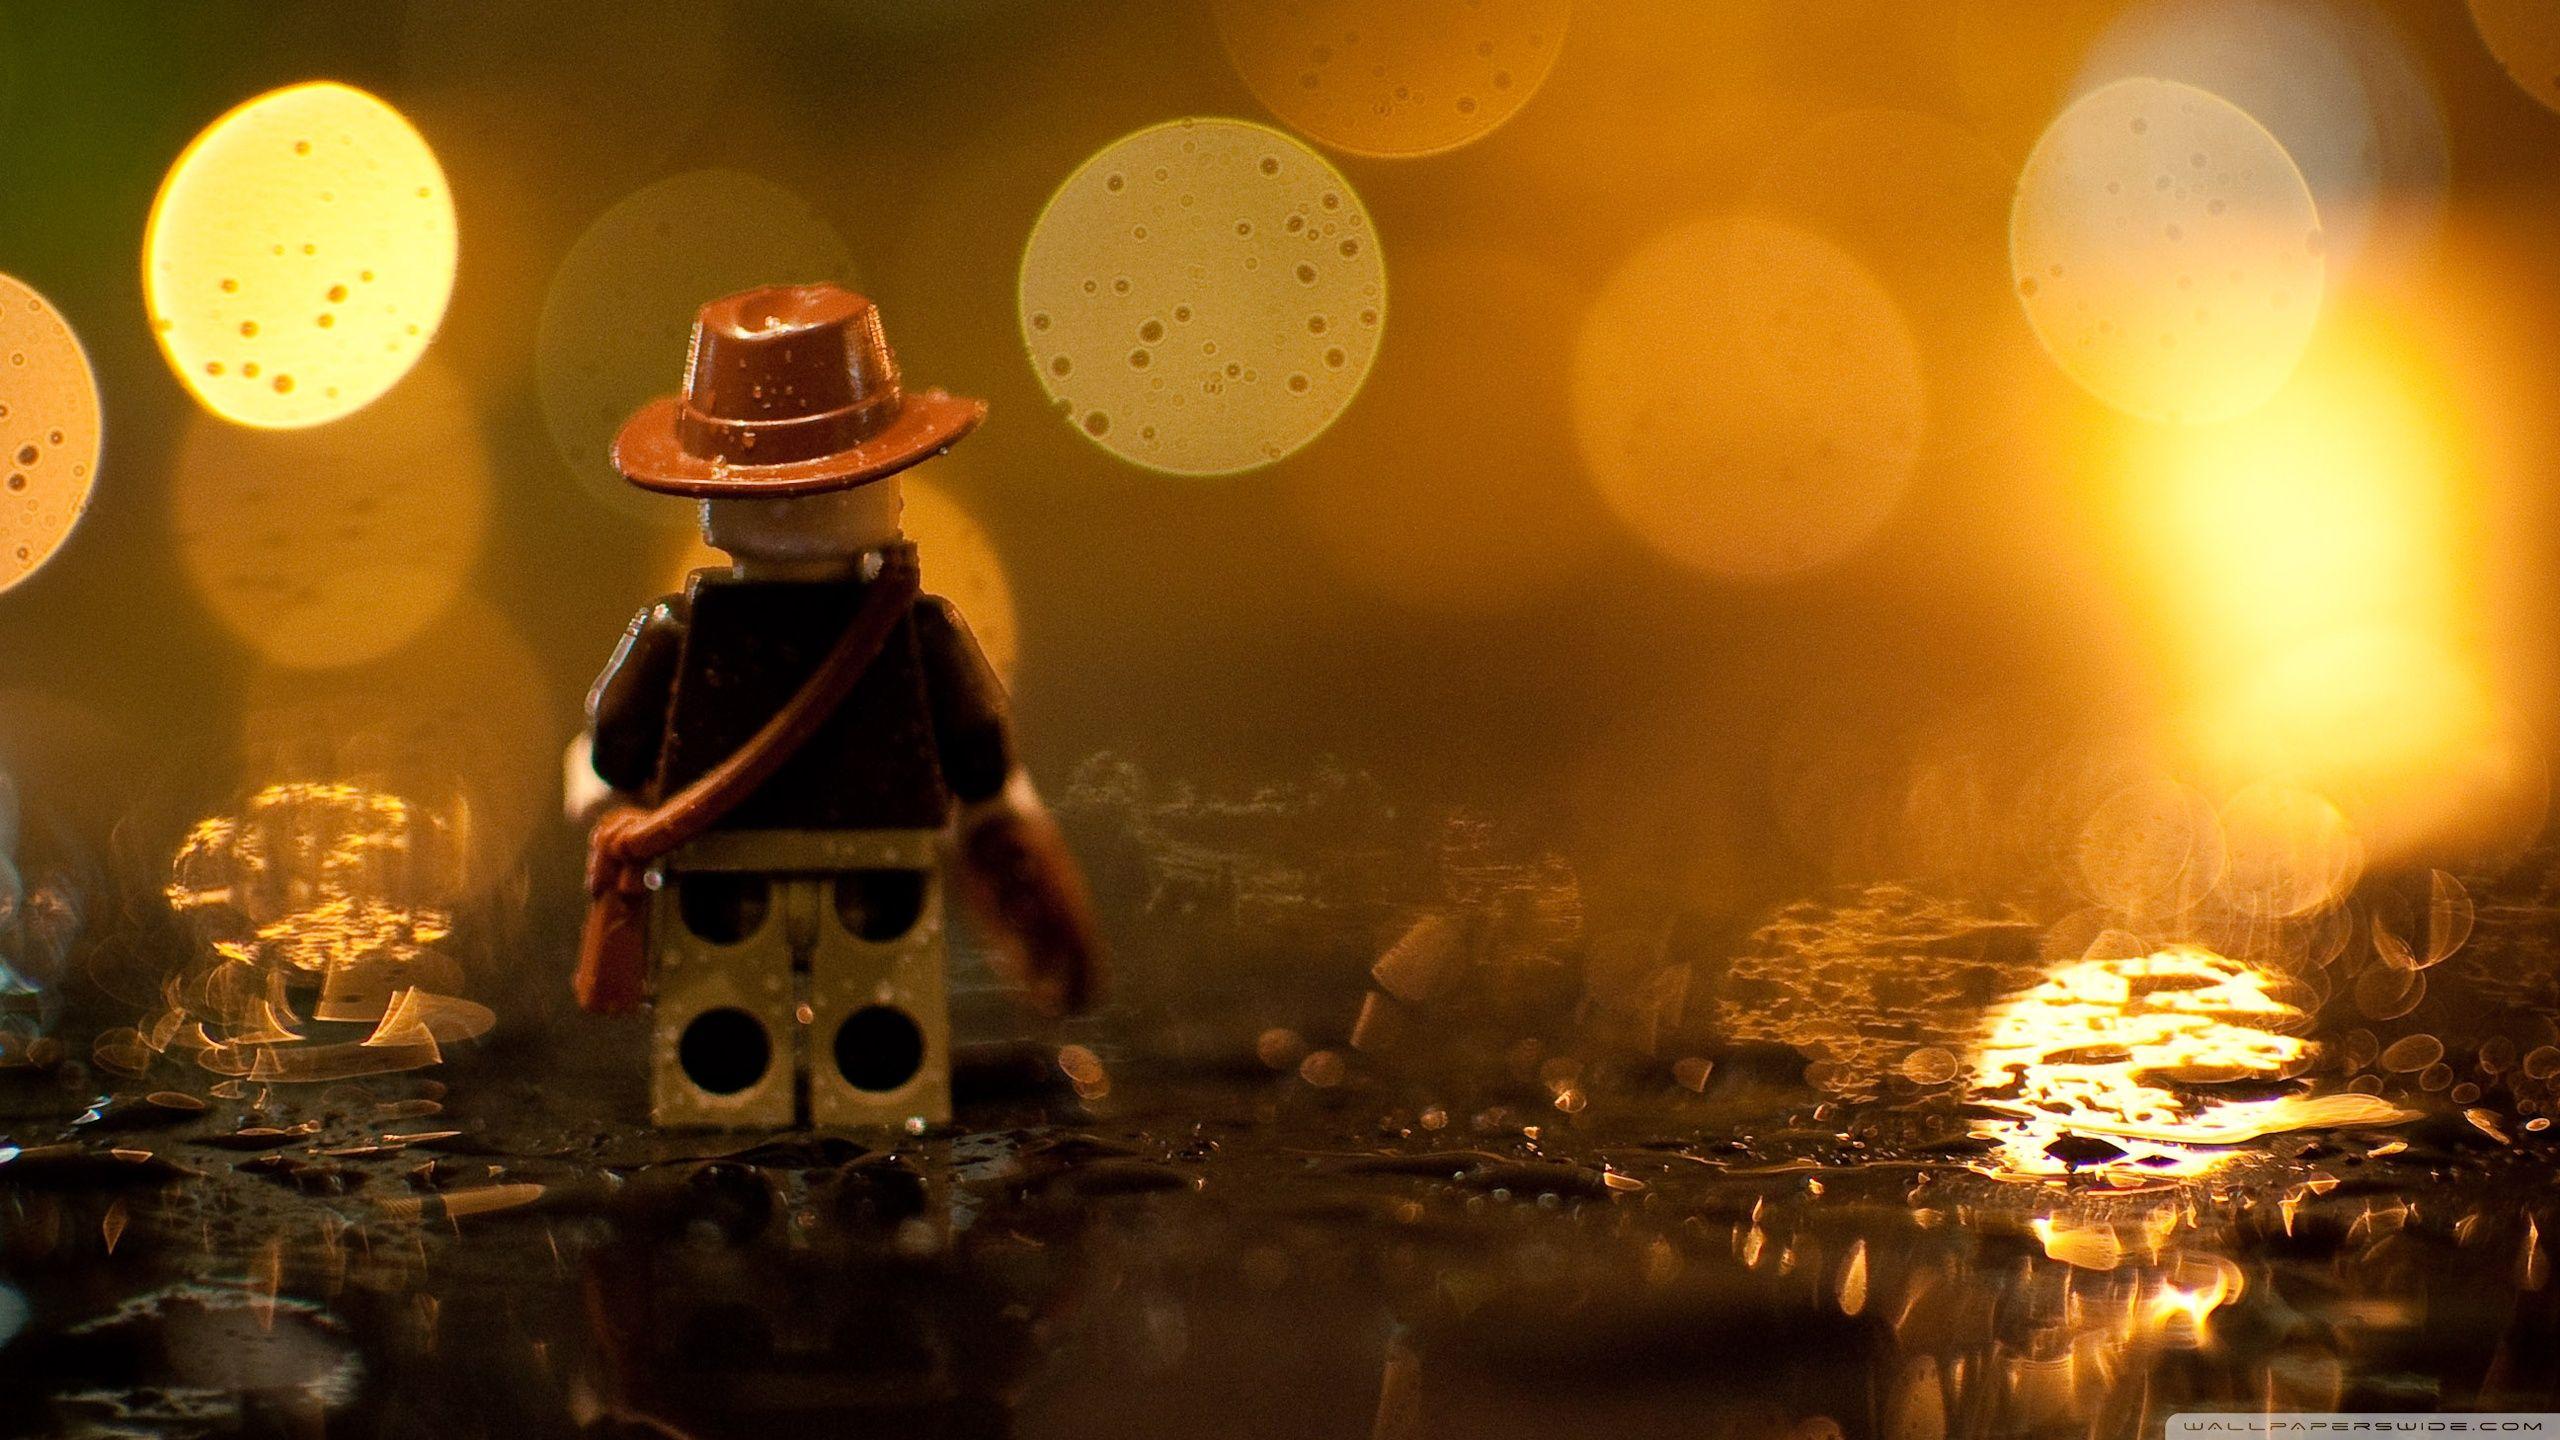 Indiana Jones Lego In The Rain Ultra HD Desktop Background Wallpaper for 4K UHD TV, Multi Display, Dual Monitor, Tablet